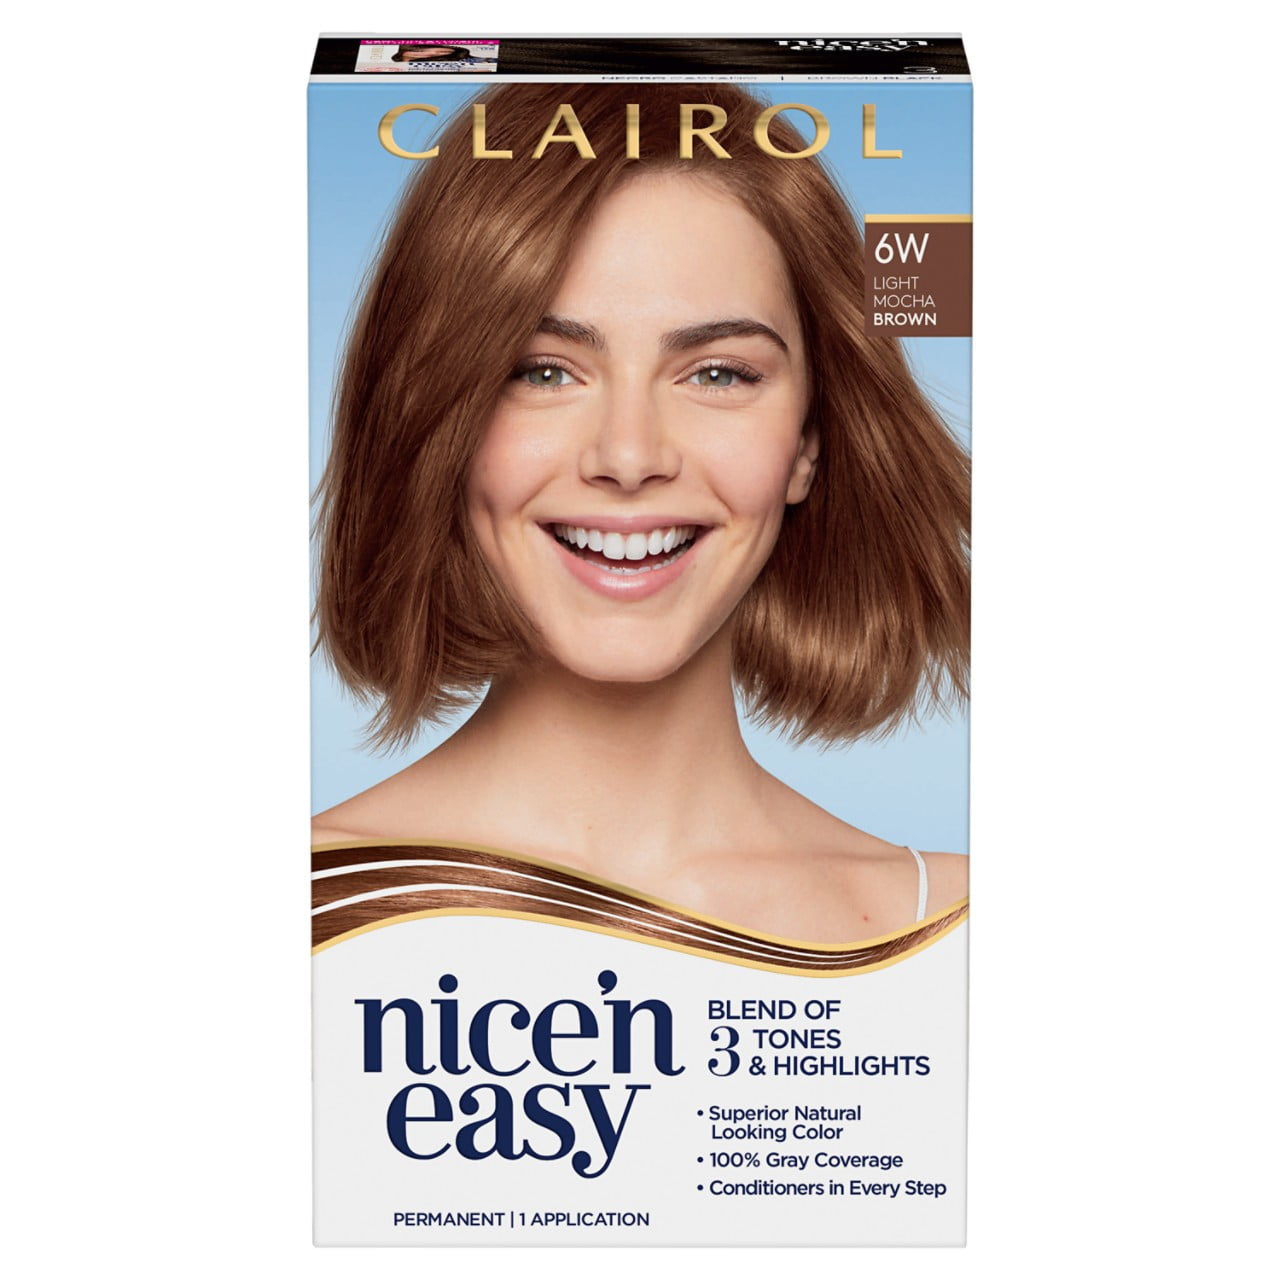 Clairol Nice'n Easy Permanent Hair Color Crème 6W Light Mocha Brown, 1